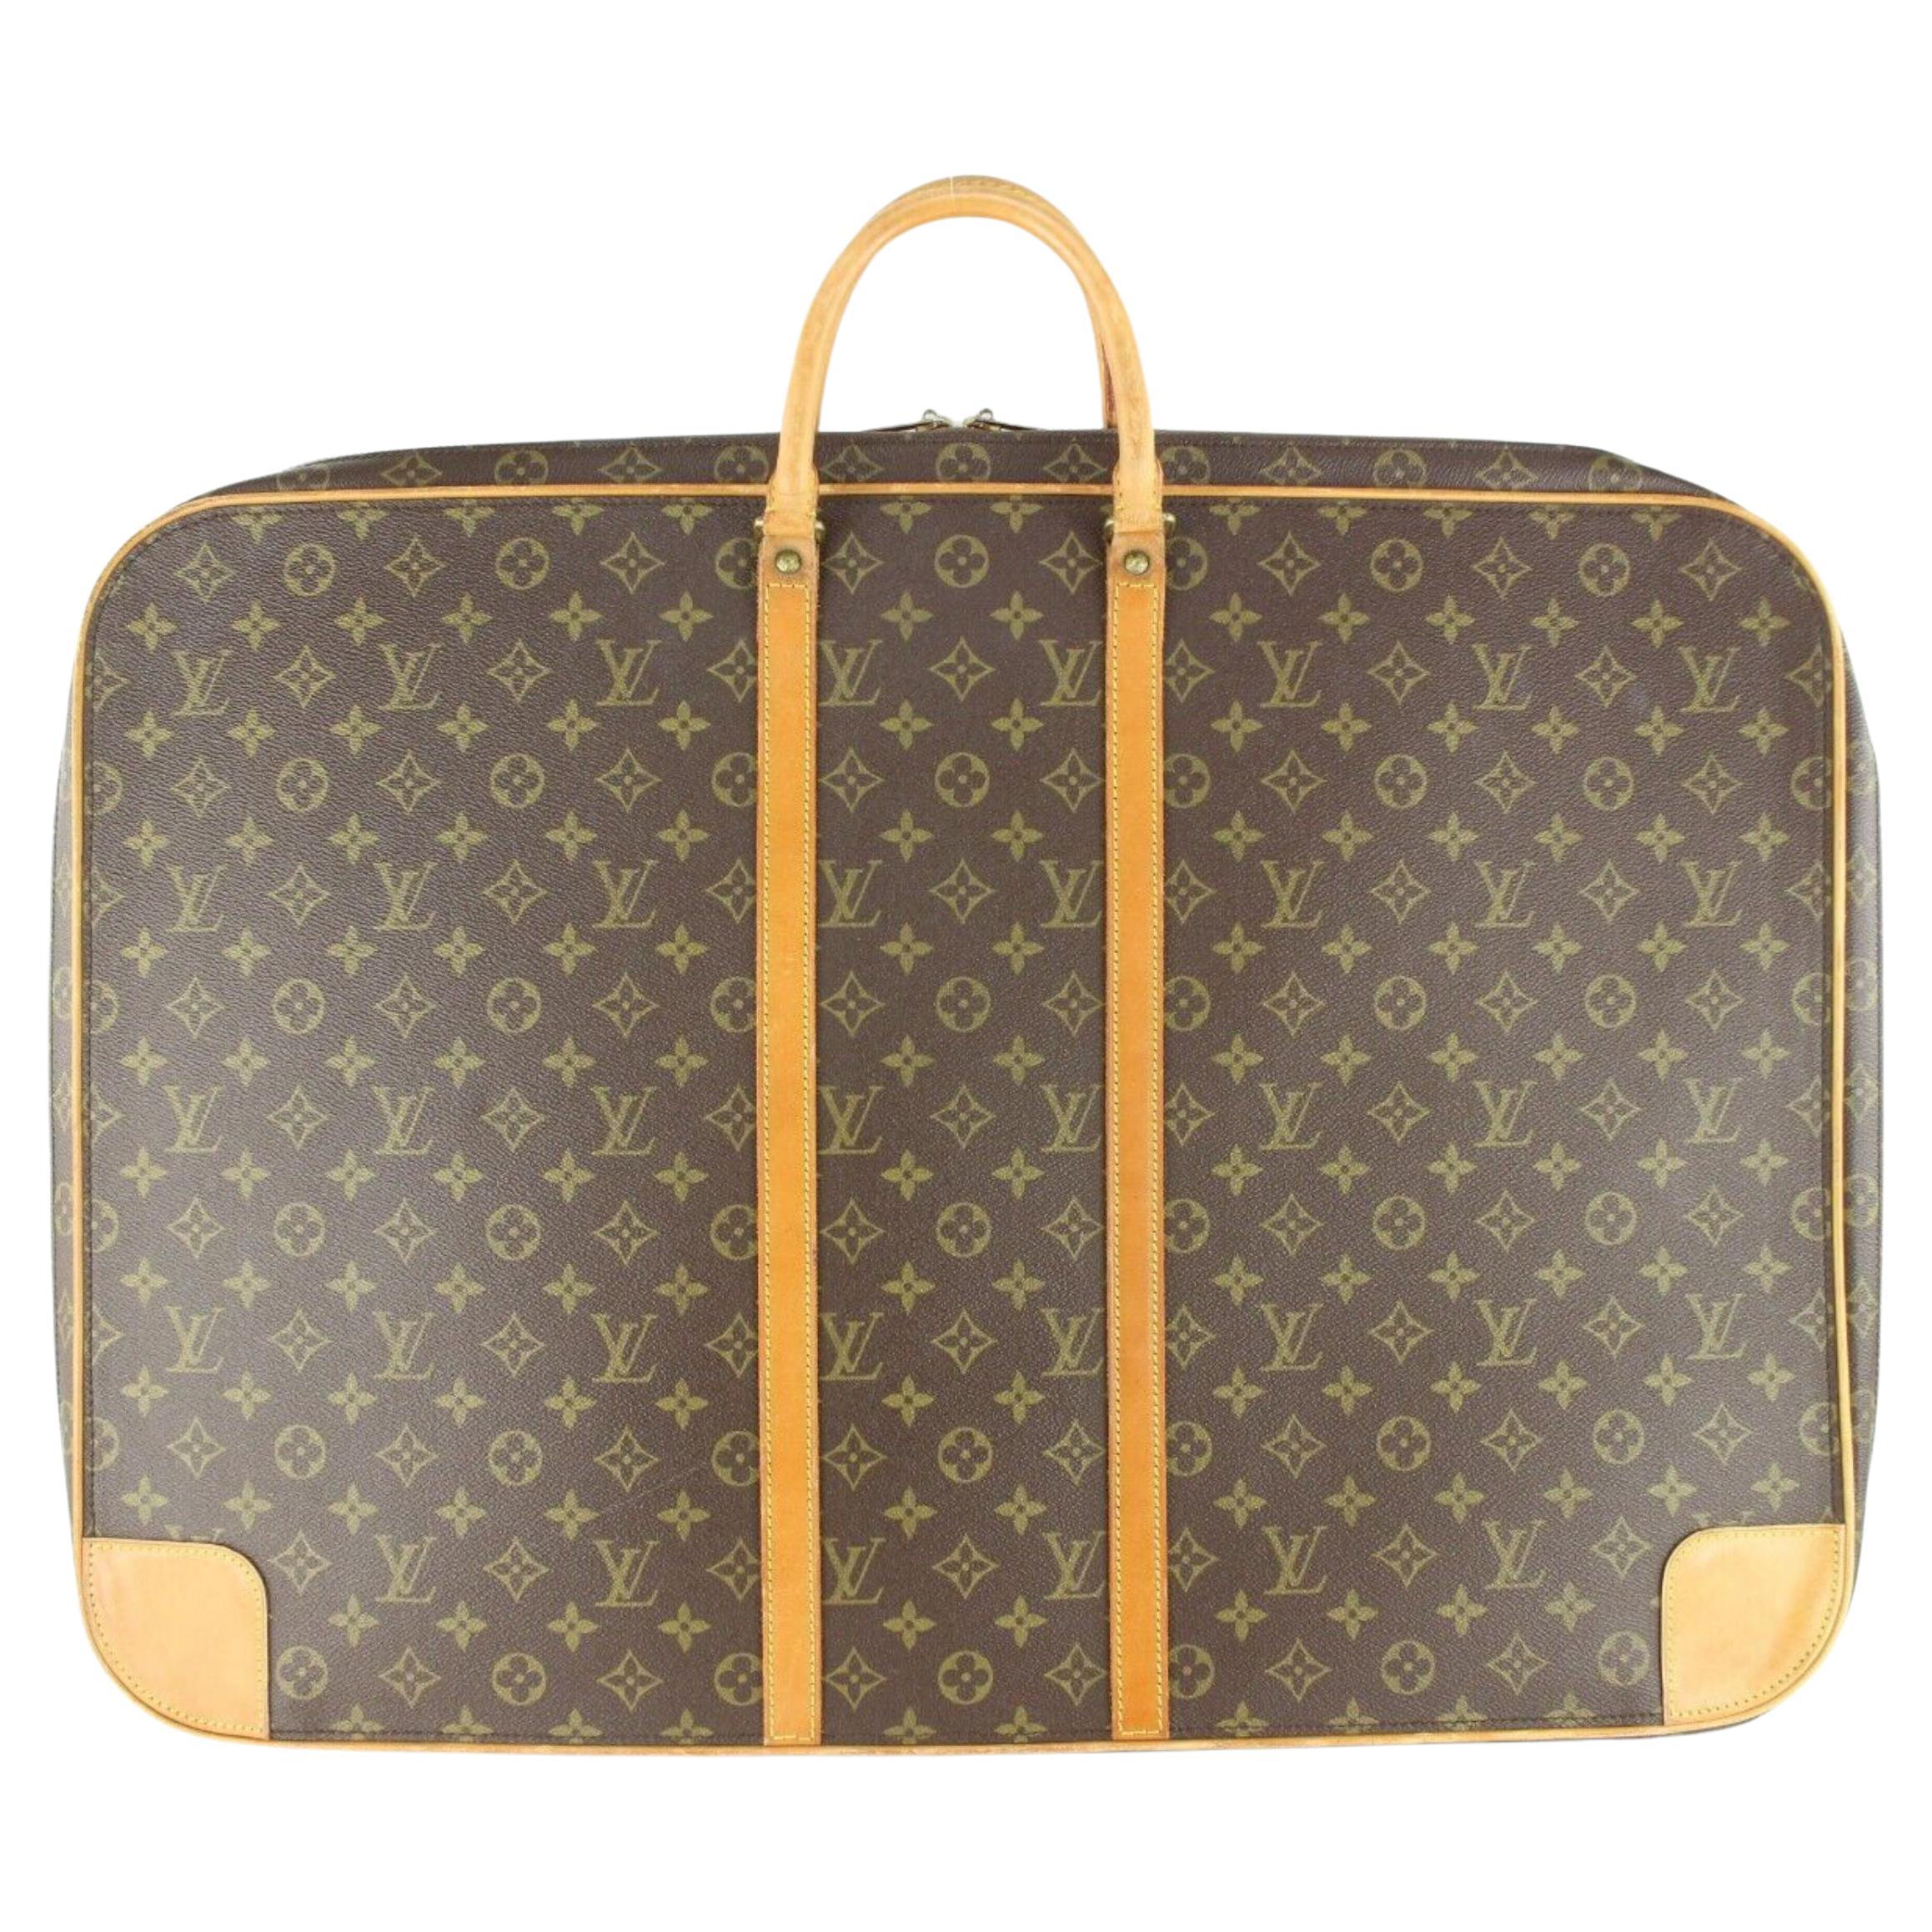 Louis Vuitton Rare Monogram Artwork Canvas Portfolio Suitcase Luggage 1LVJ0119 For Sale